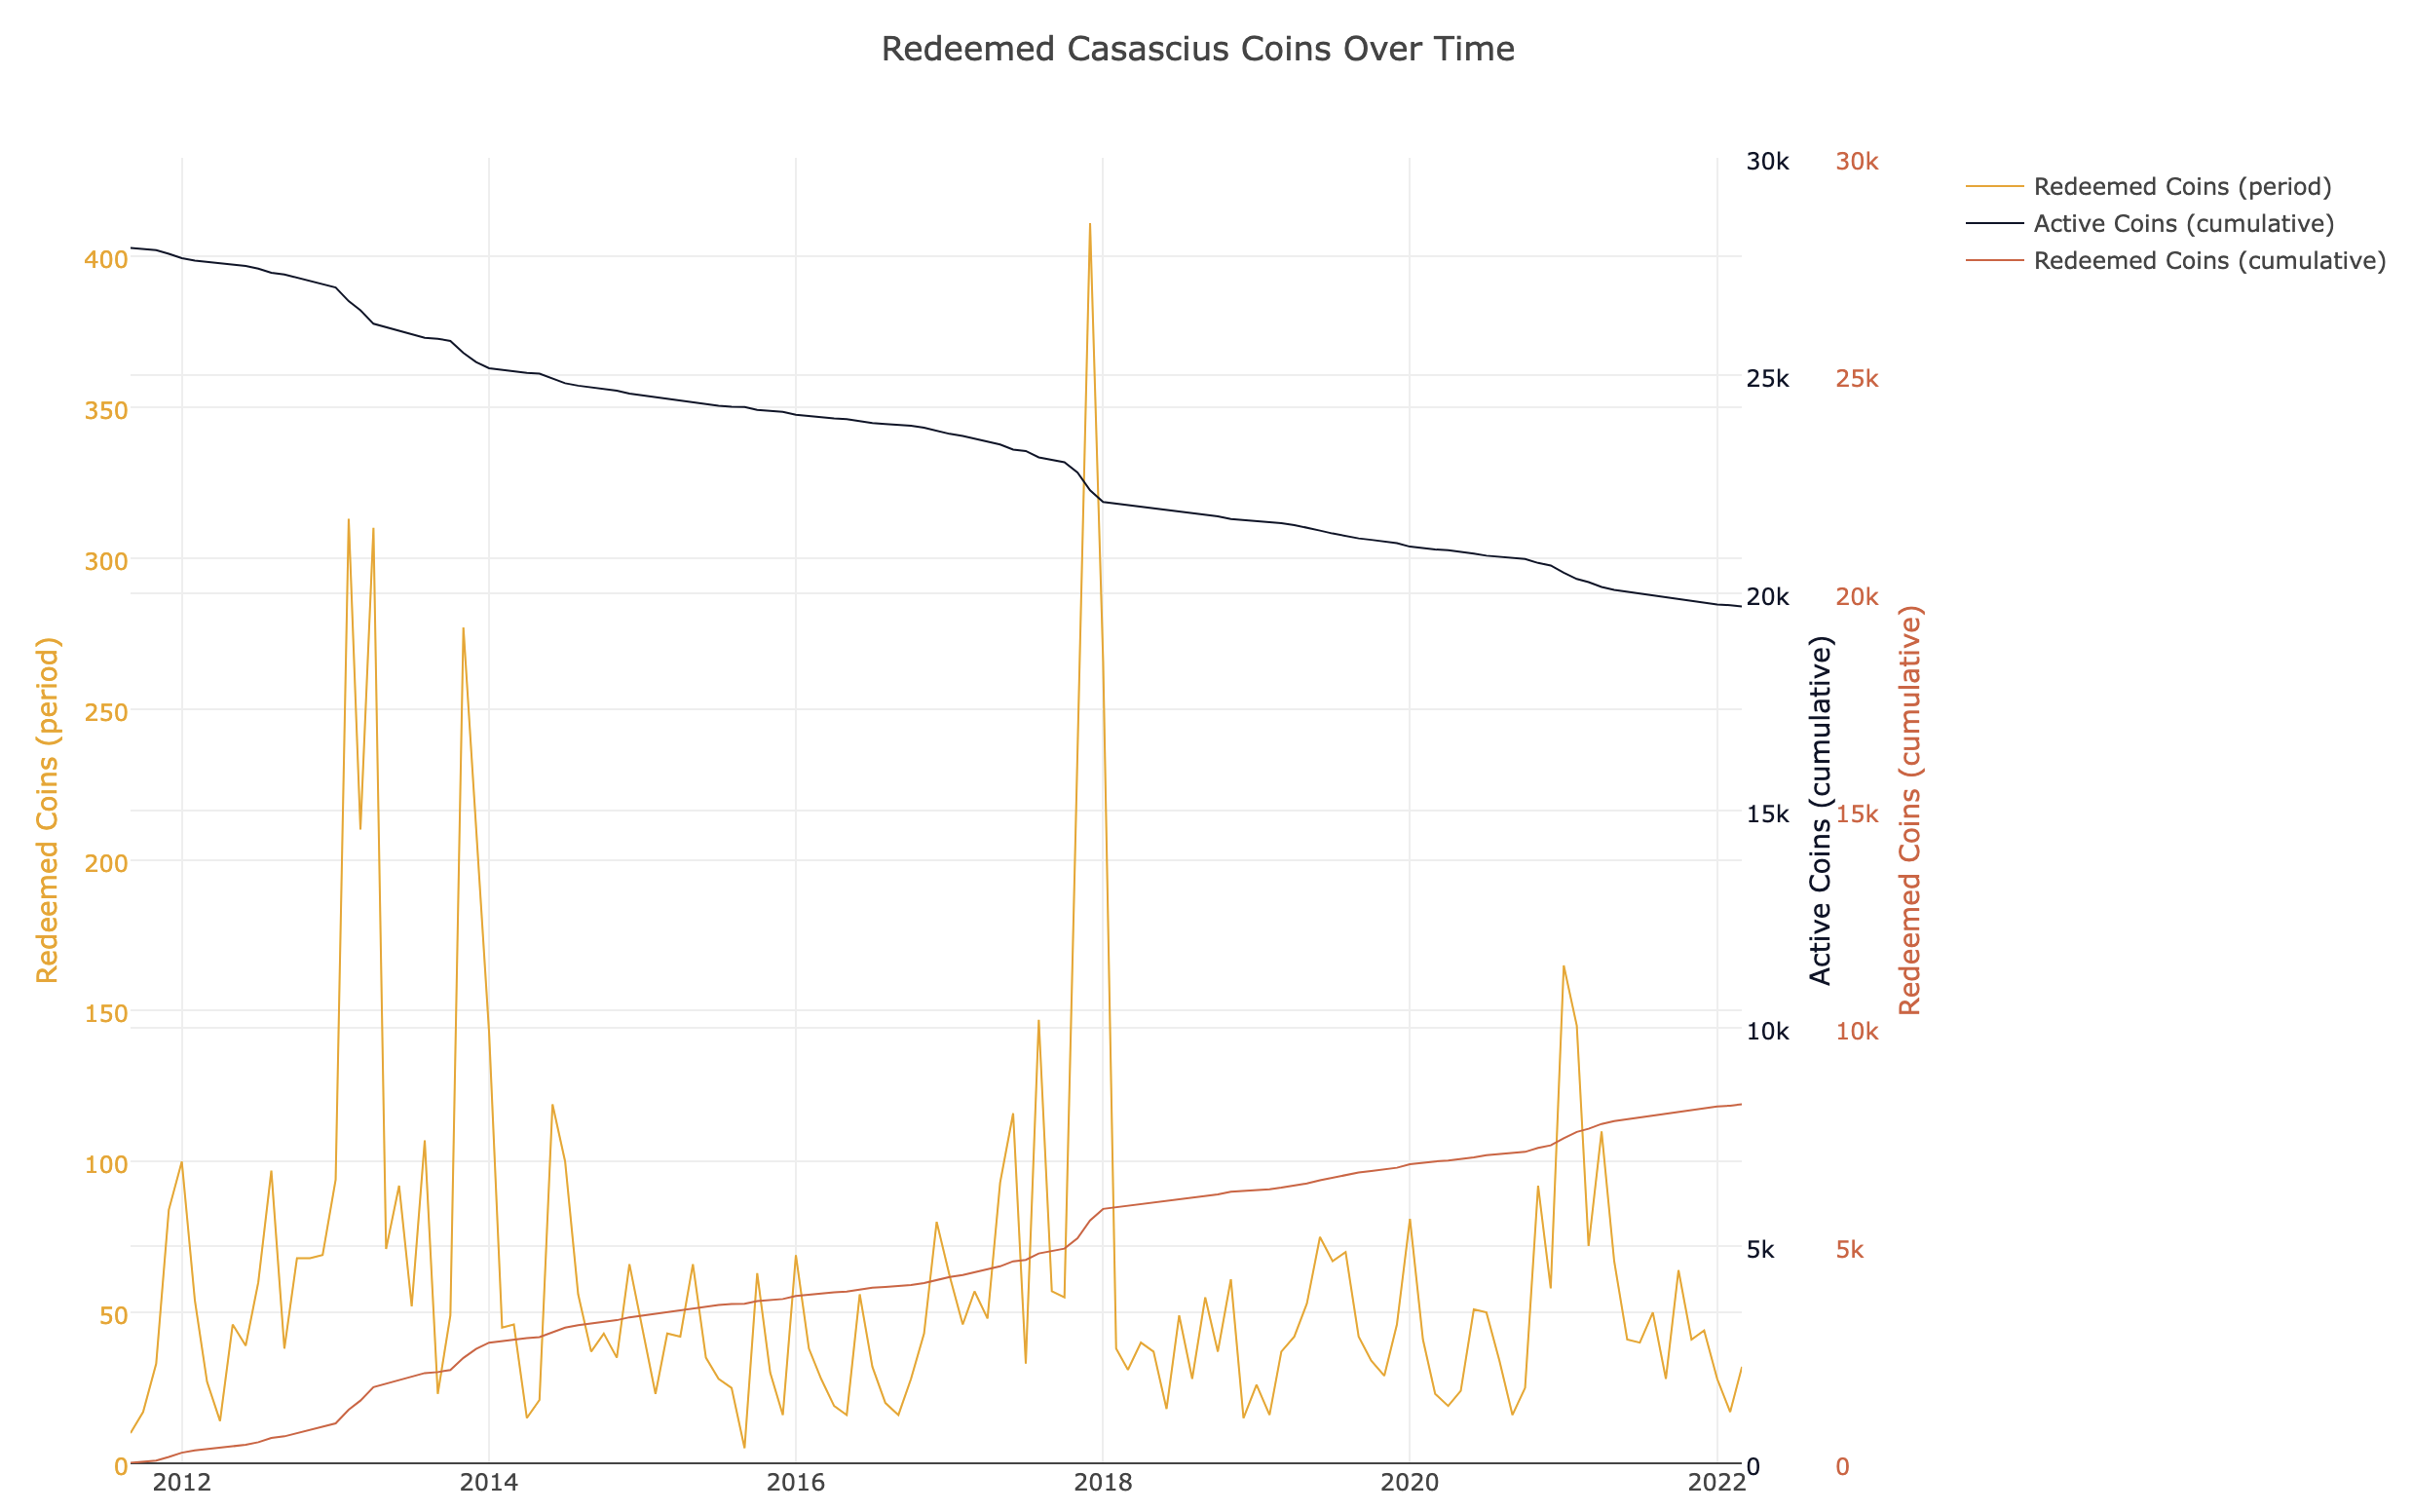 Casascius Tracker - Analytics on Redeemed Casascius Coins